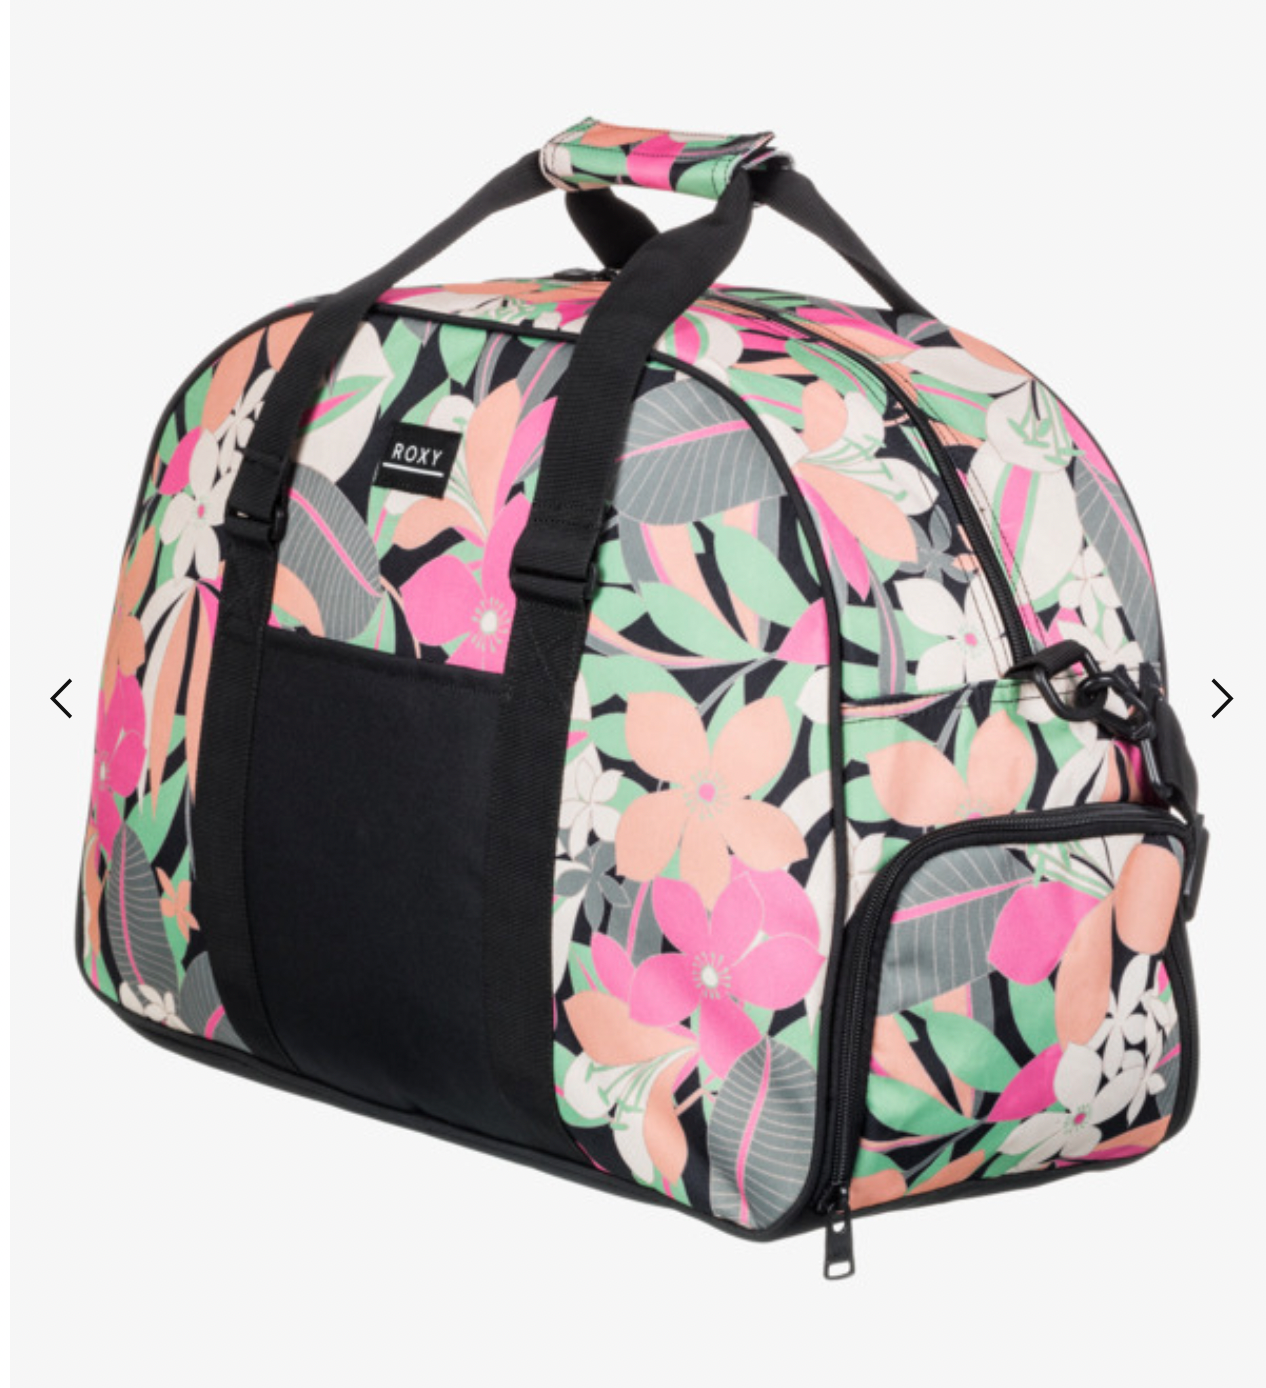 ROXY Feel Happy - Medium Duffle Bag for Women